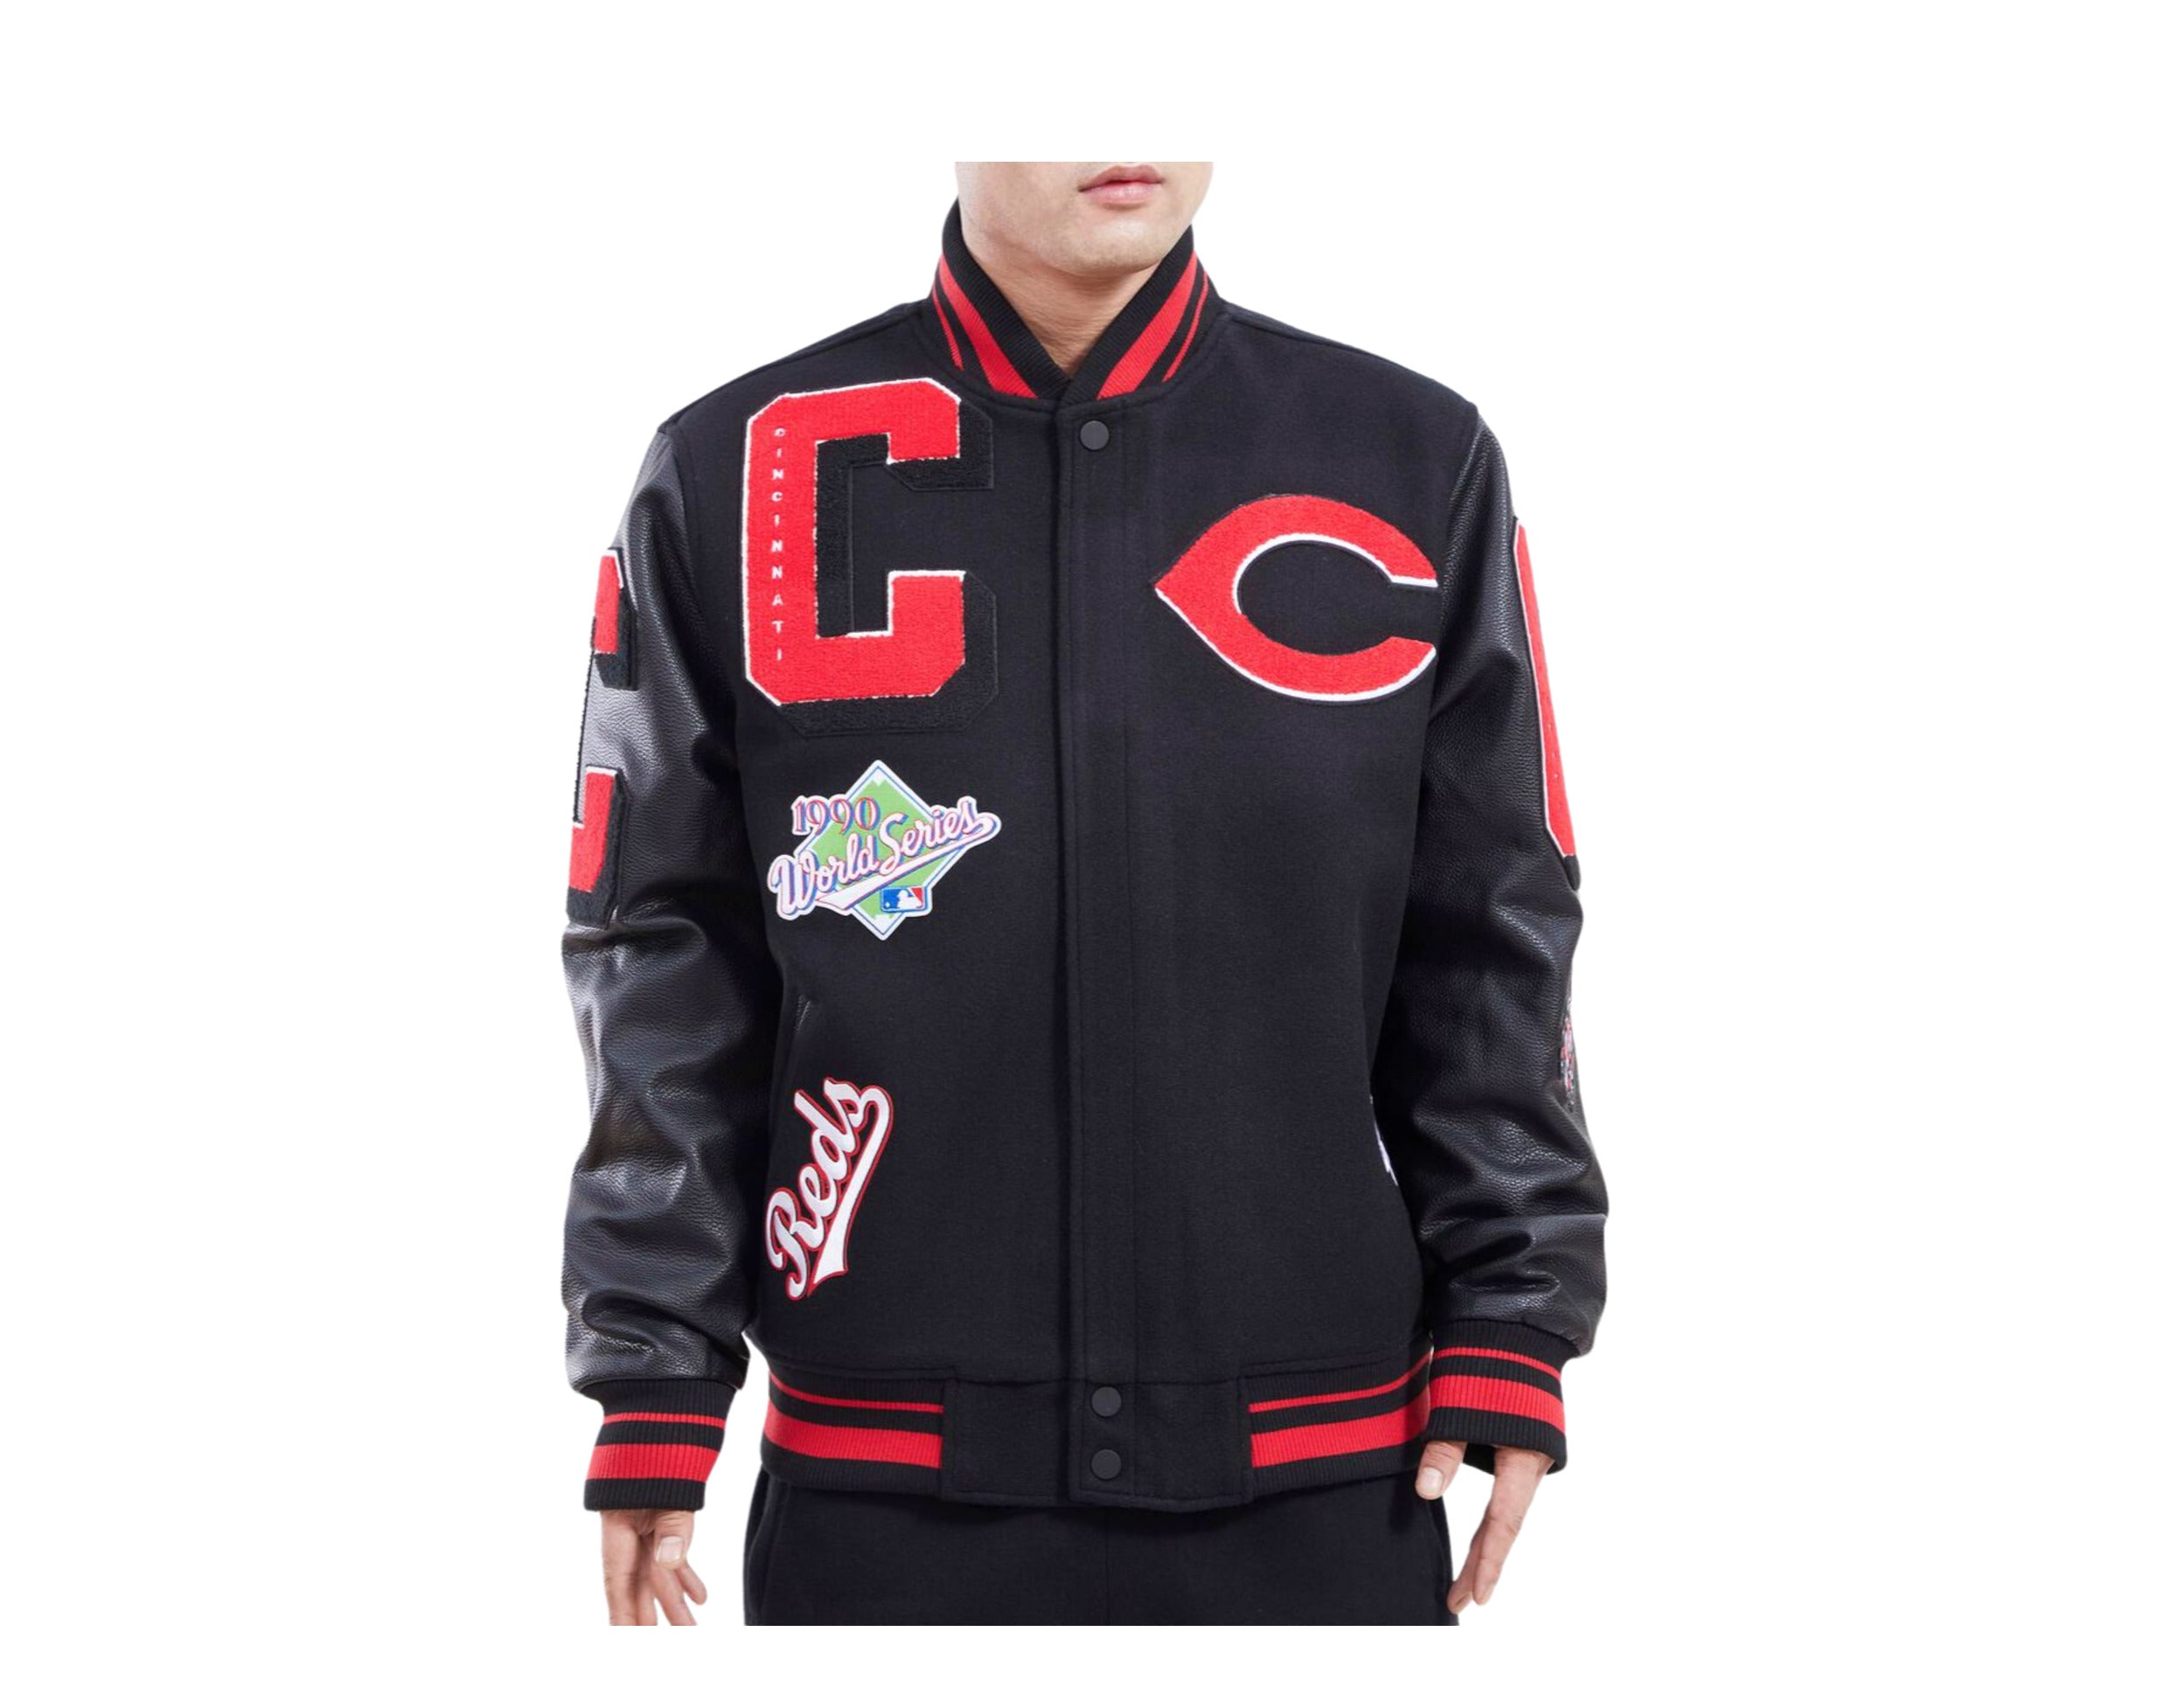 Full-Snap Wool/Leather Mash Up St. Louis Cardinals Varsity Jacket